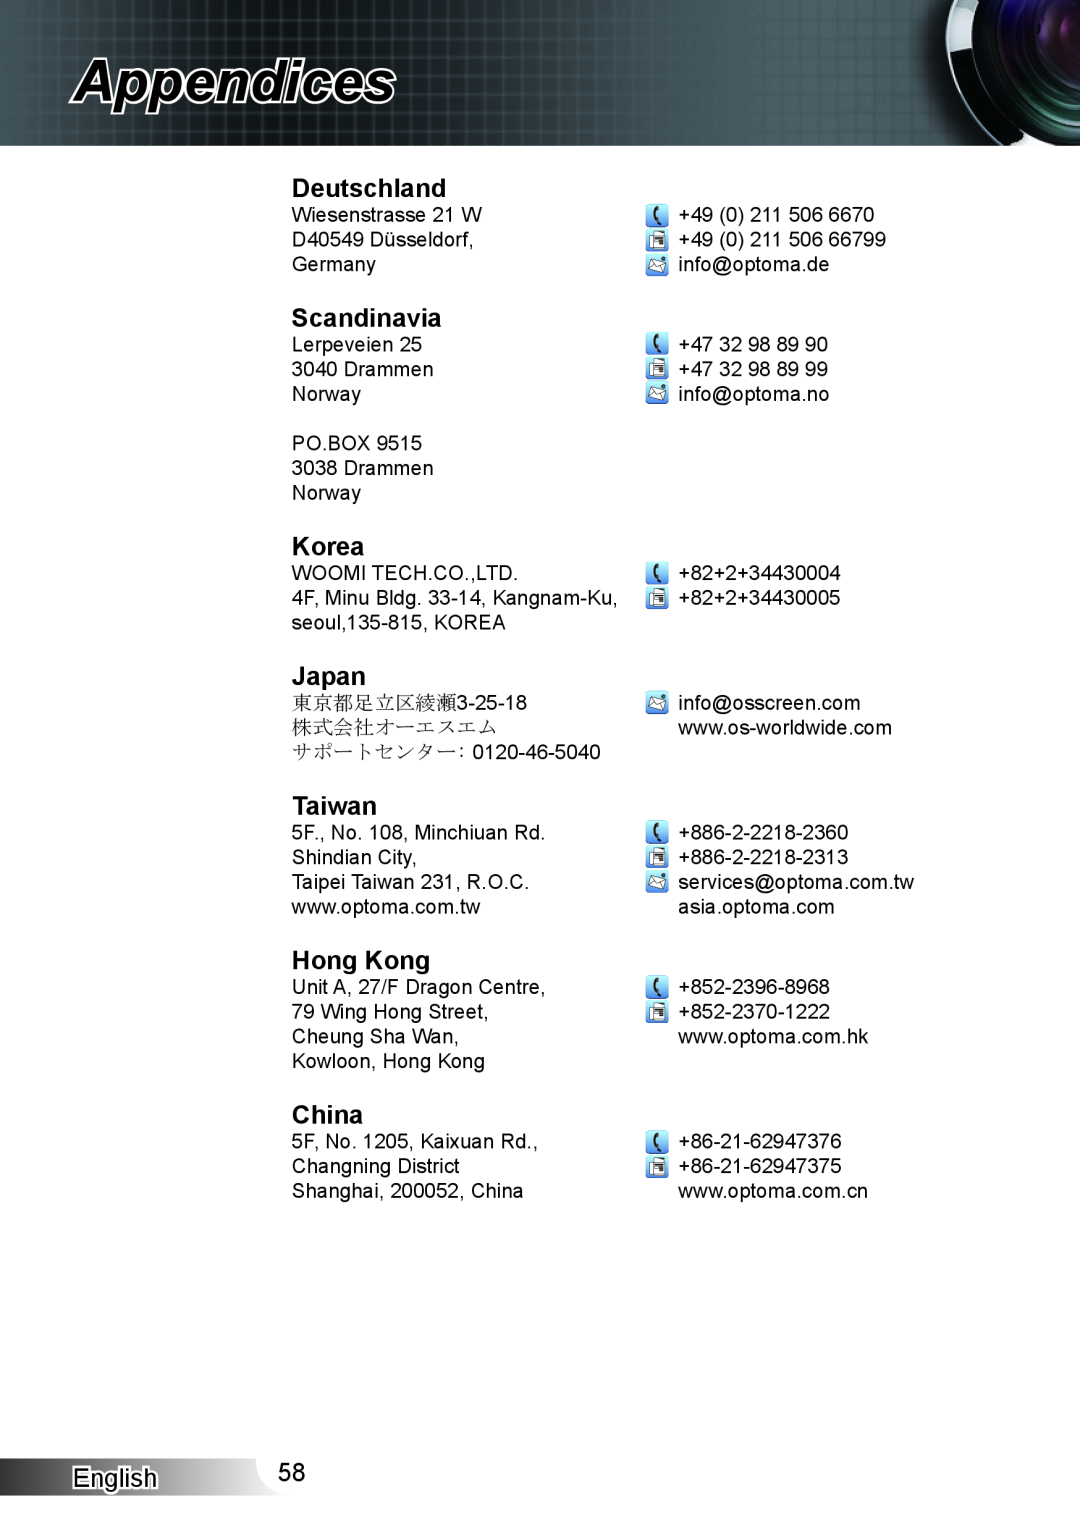 Optoma Technology HD33 manual Deutschland, Scandinavia, Korea, Japan, Taiwan, Hong Kong, China, Appendices 